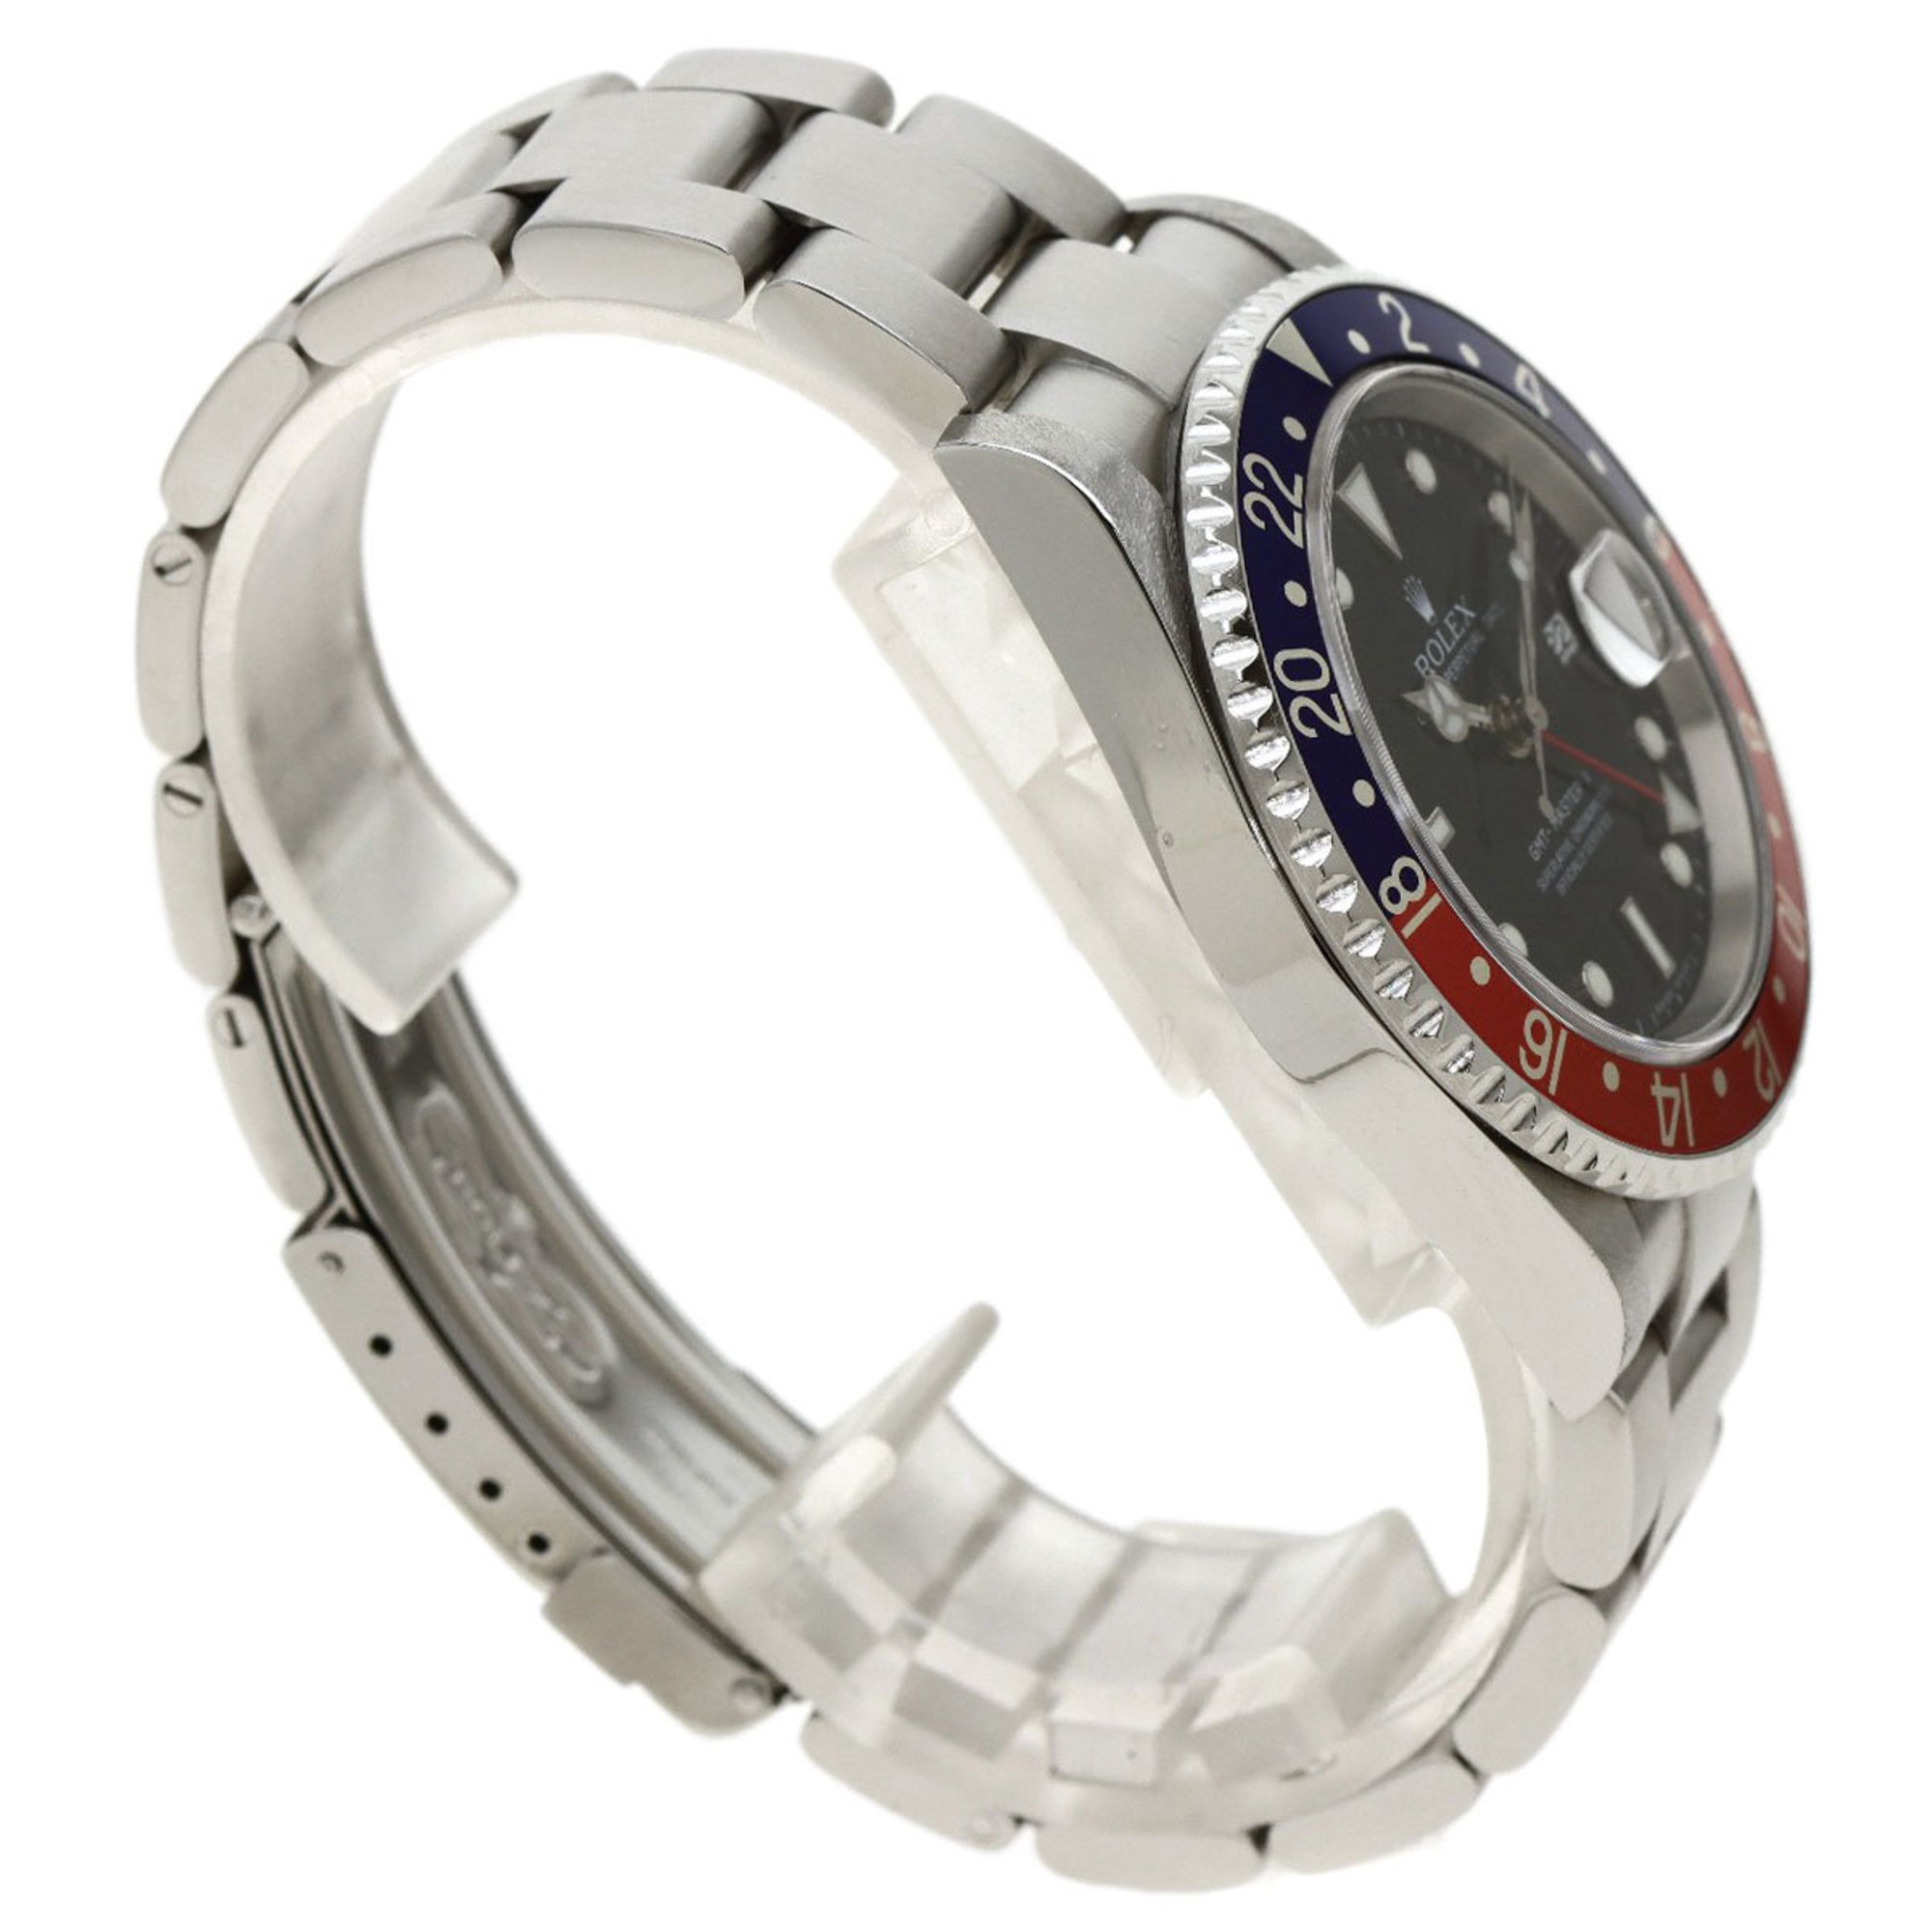 Rolex 16710T GMT Master 2 Red Blue Bezel Stick Dial Watch Stainless Steel SS Men's ROLEX